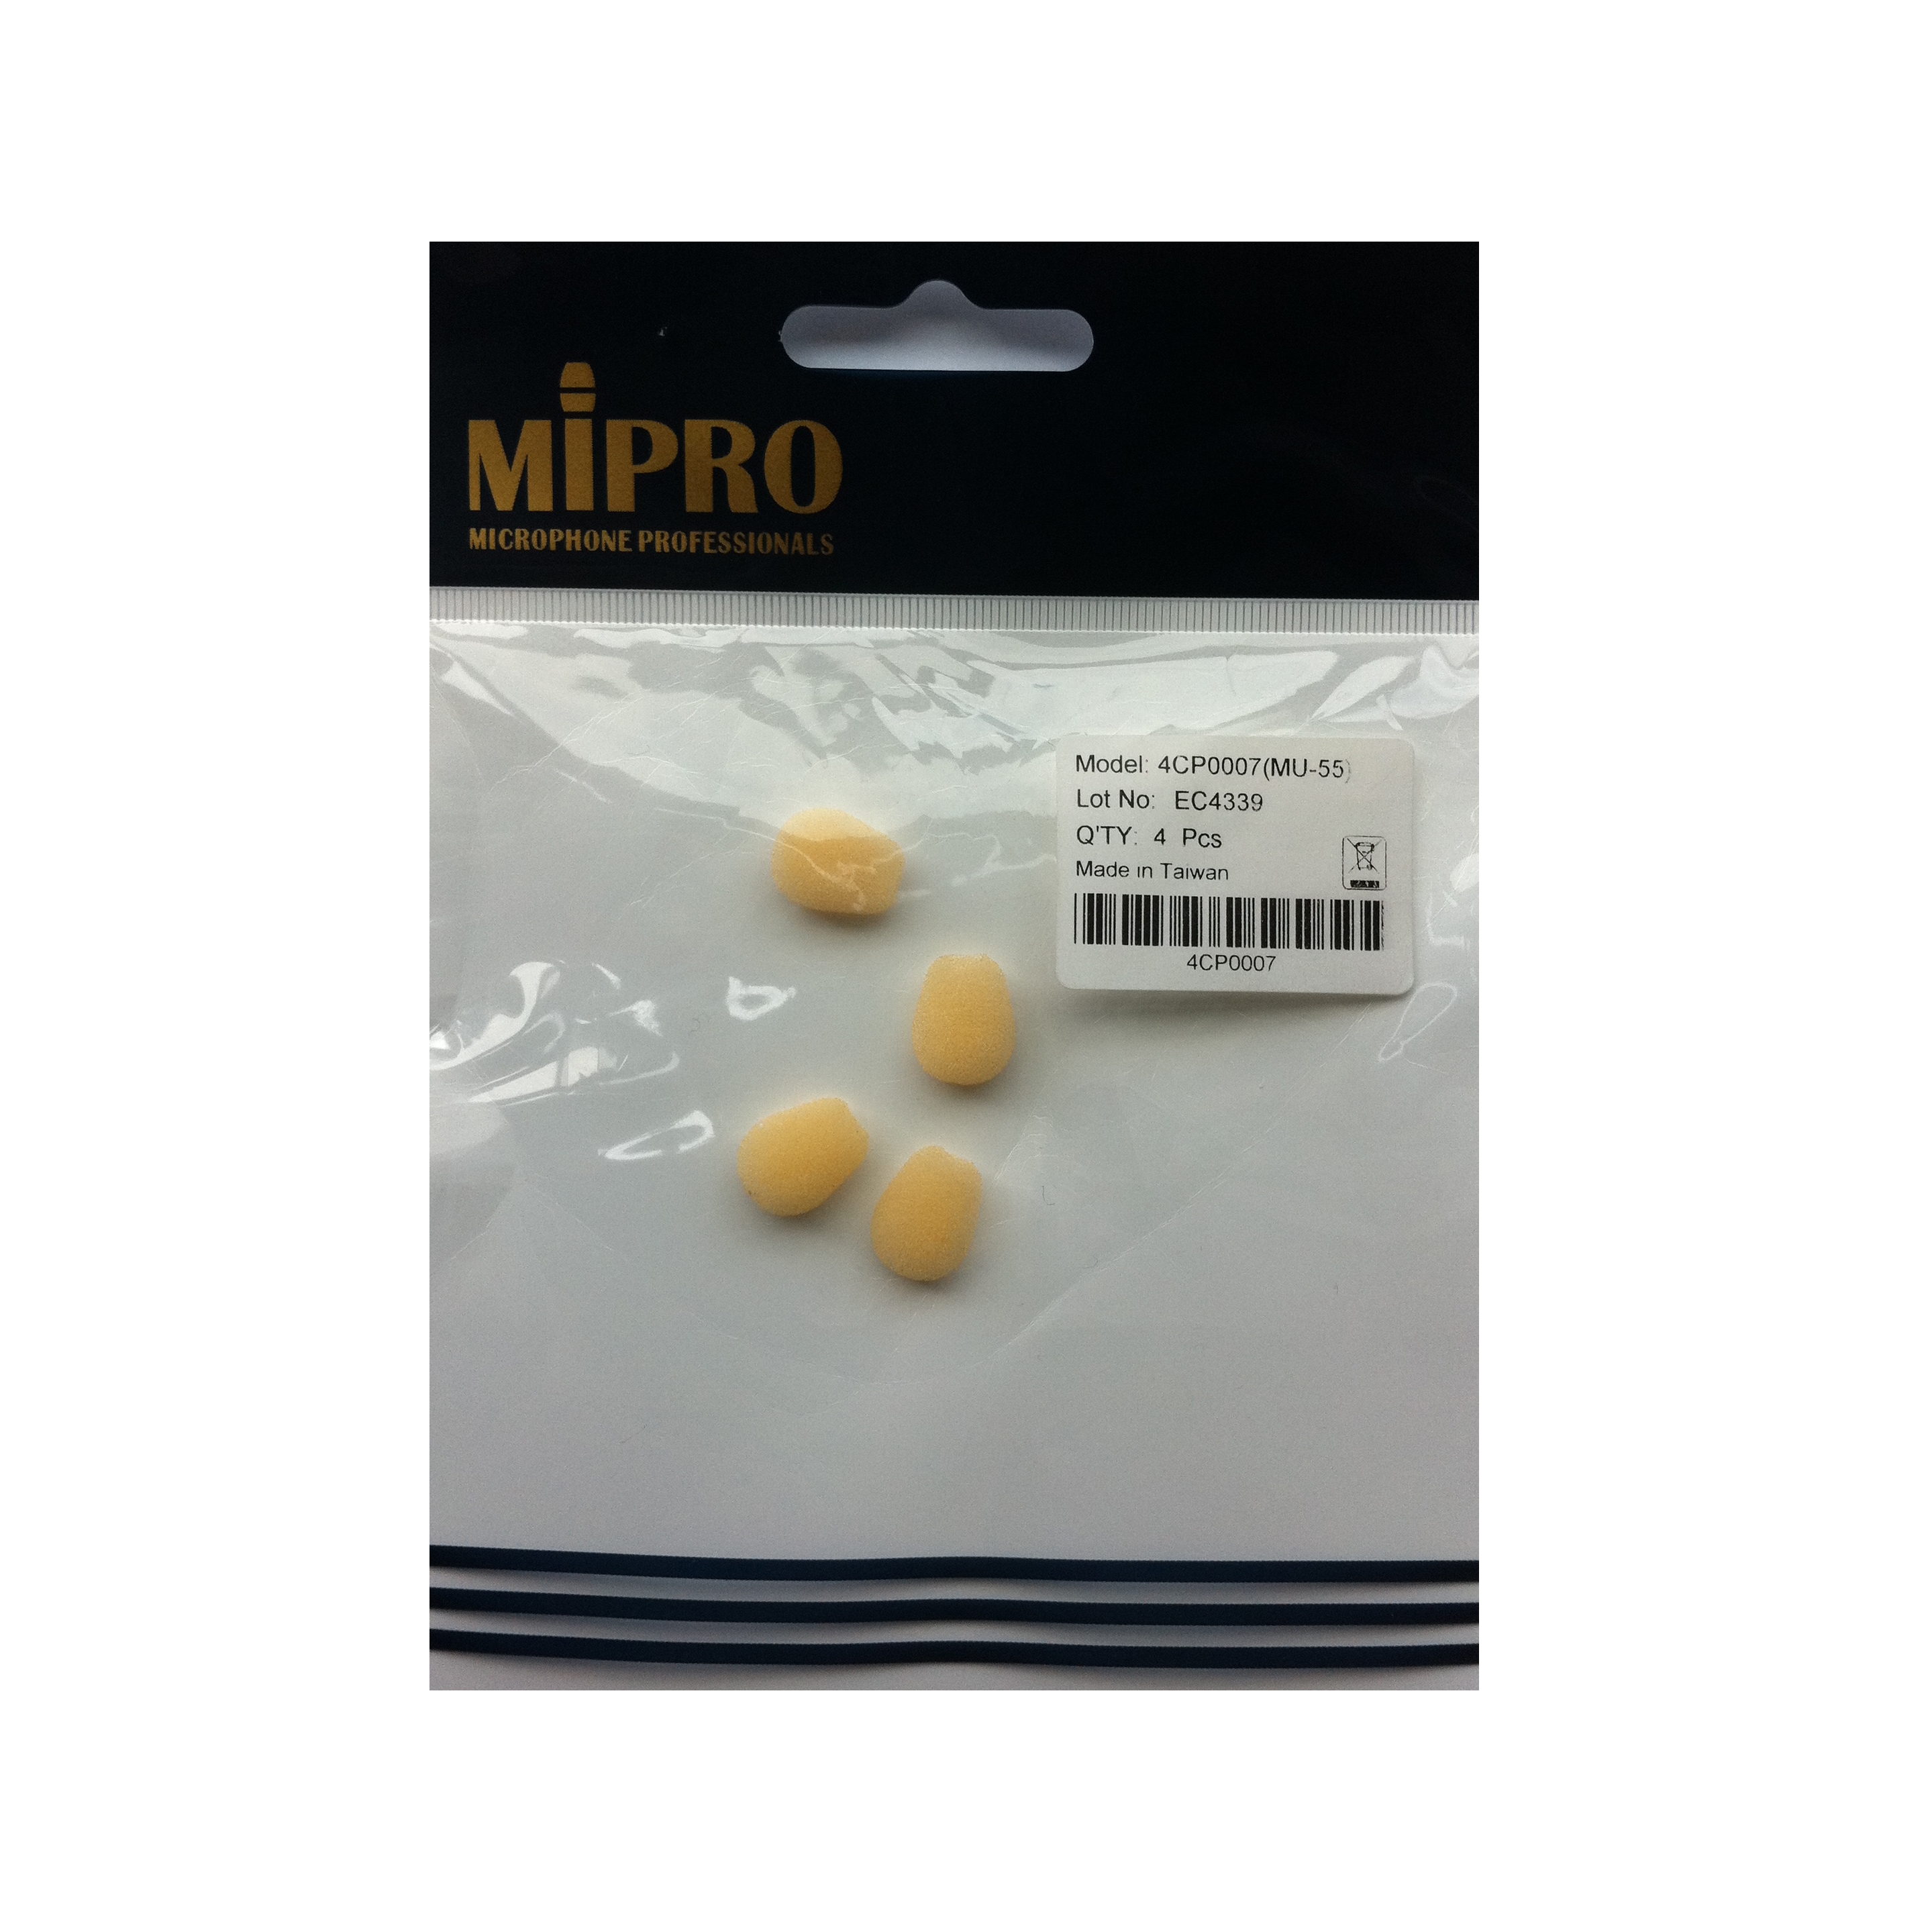 MiPro 4CP0007 Foam Pop Shield for MiPro MU-55L & MU-55HN Headset Microphones (Pack of 4) - Beige